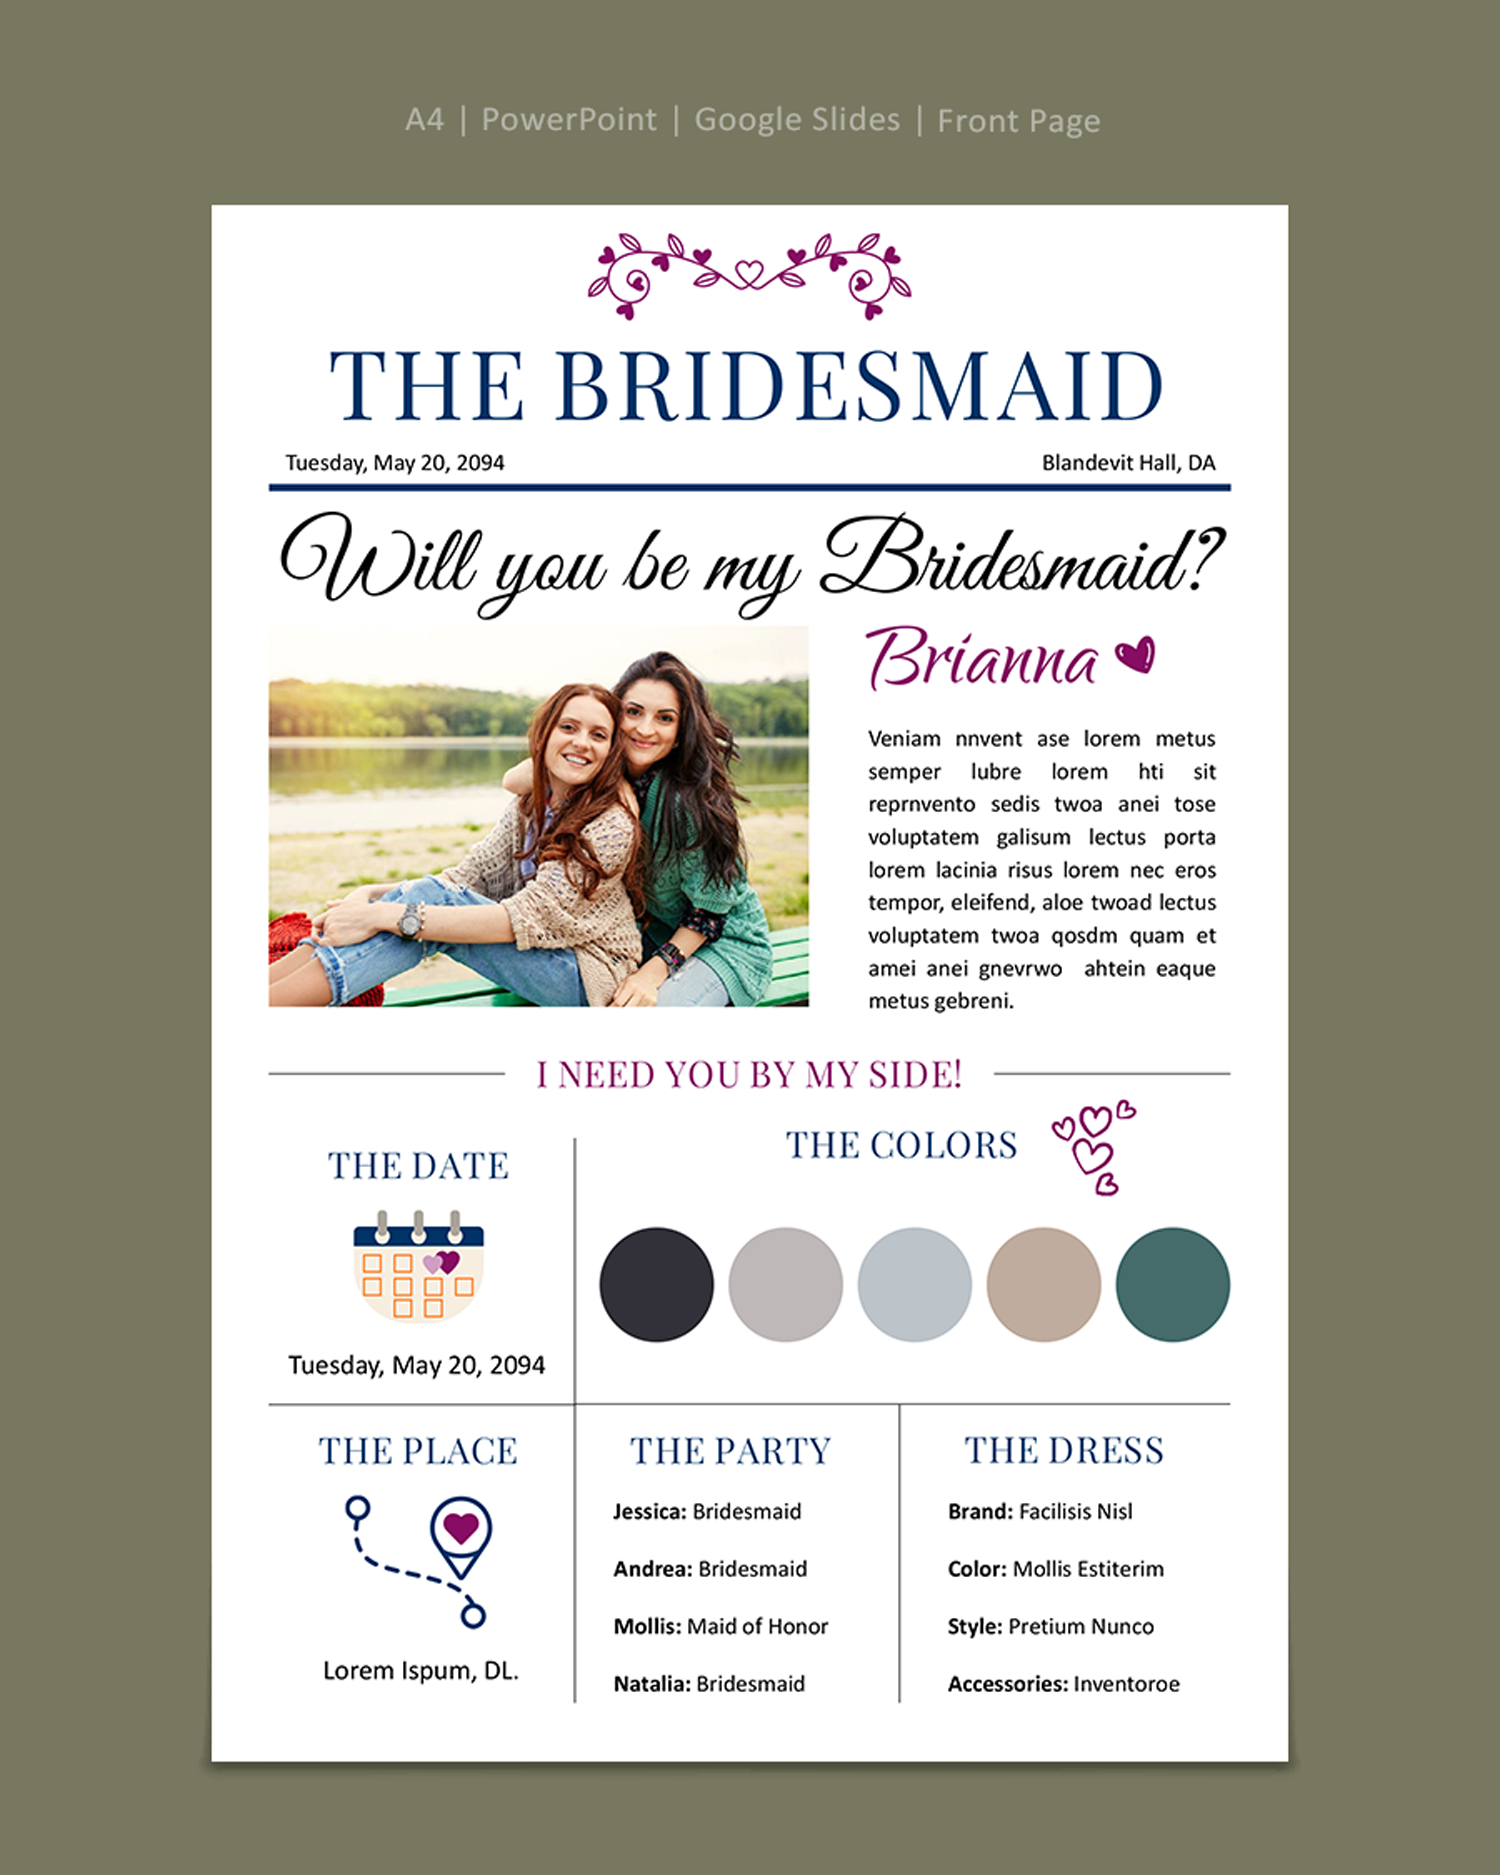 Bridesmaid Proposal Newspaper Template - PowerPoint, Google Slides